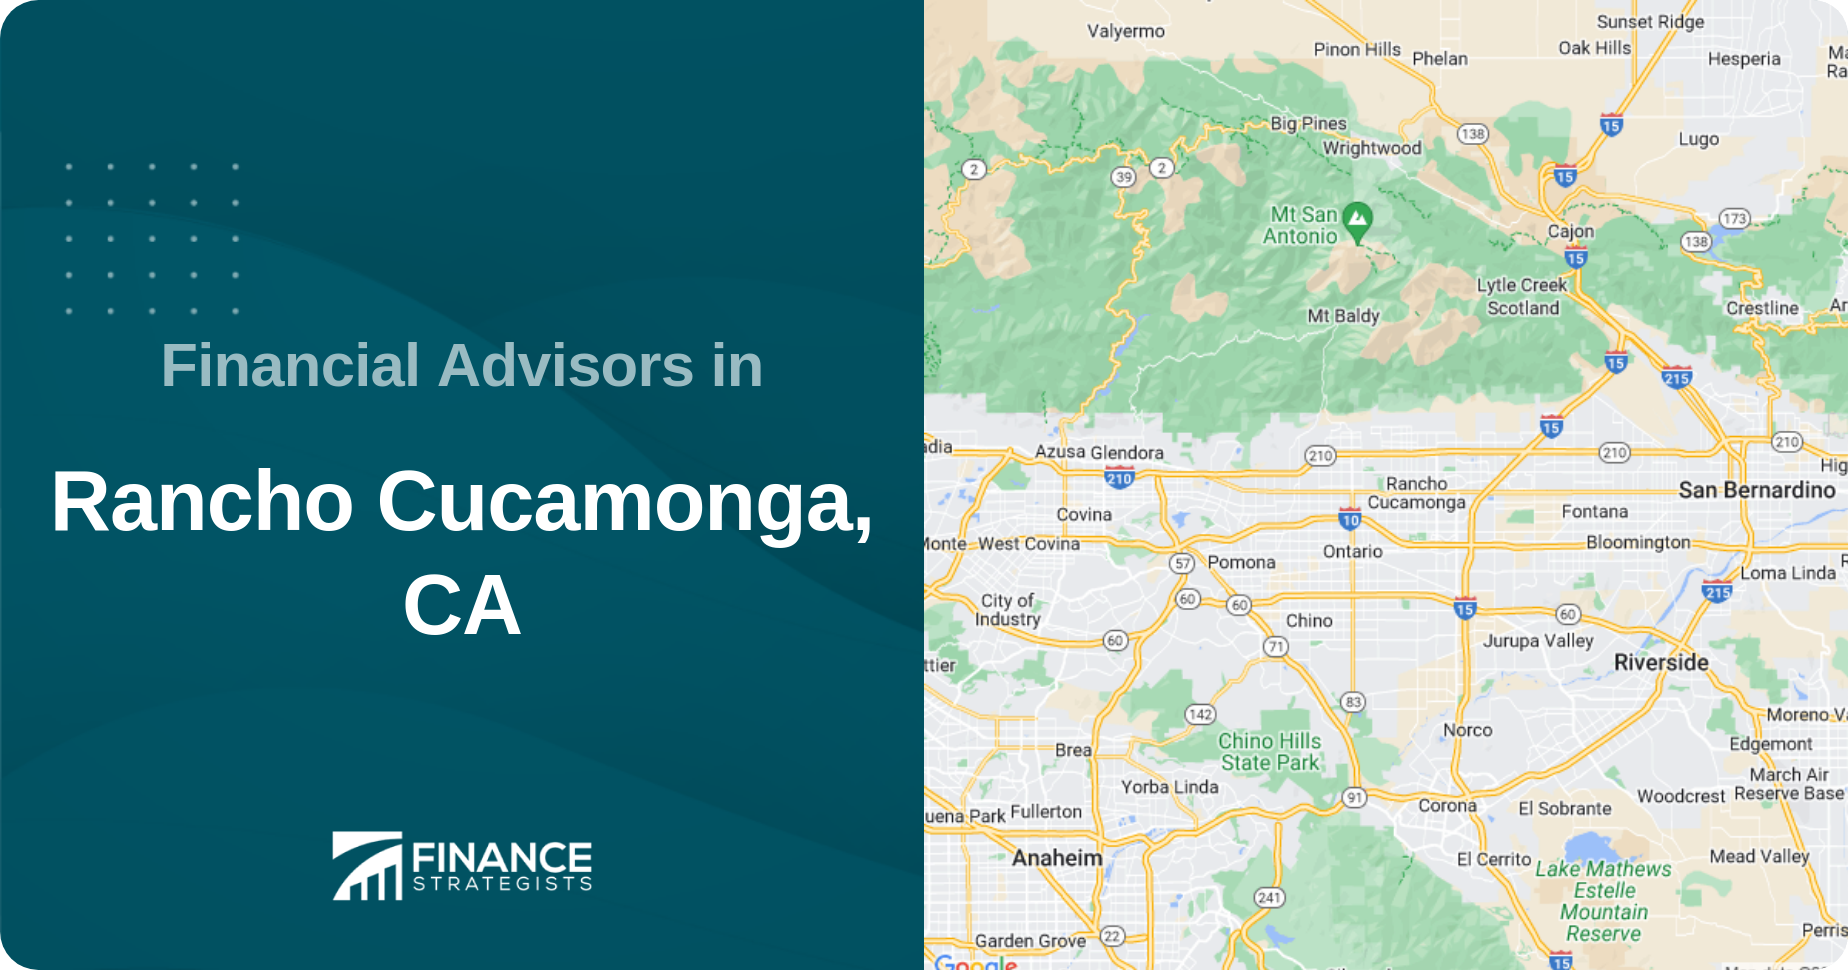 Financial Advisors in Rancho Cucamonga, CA